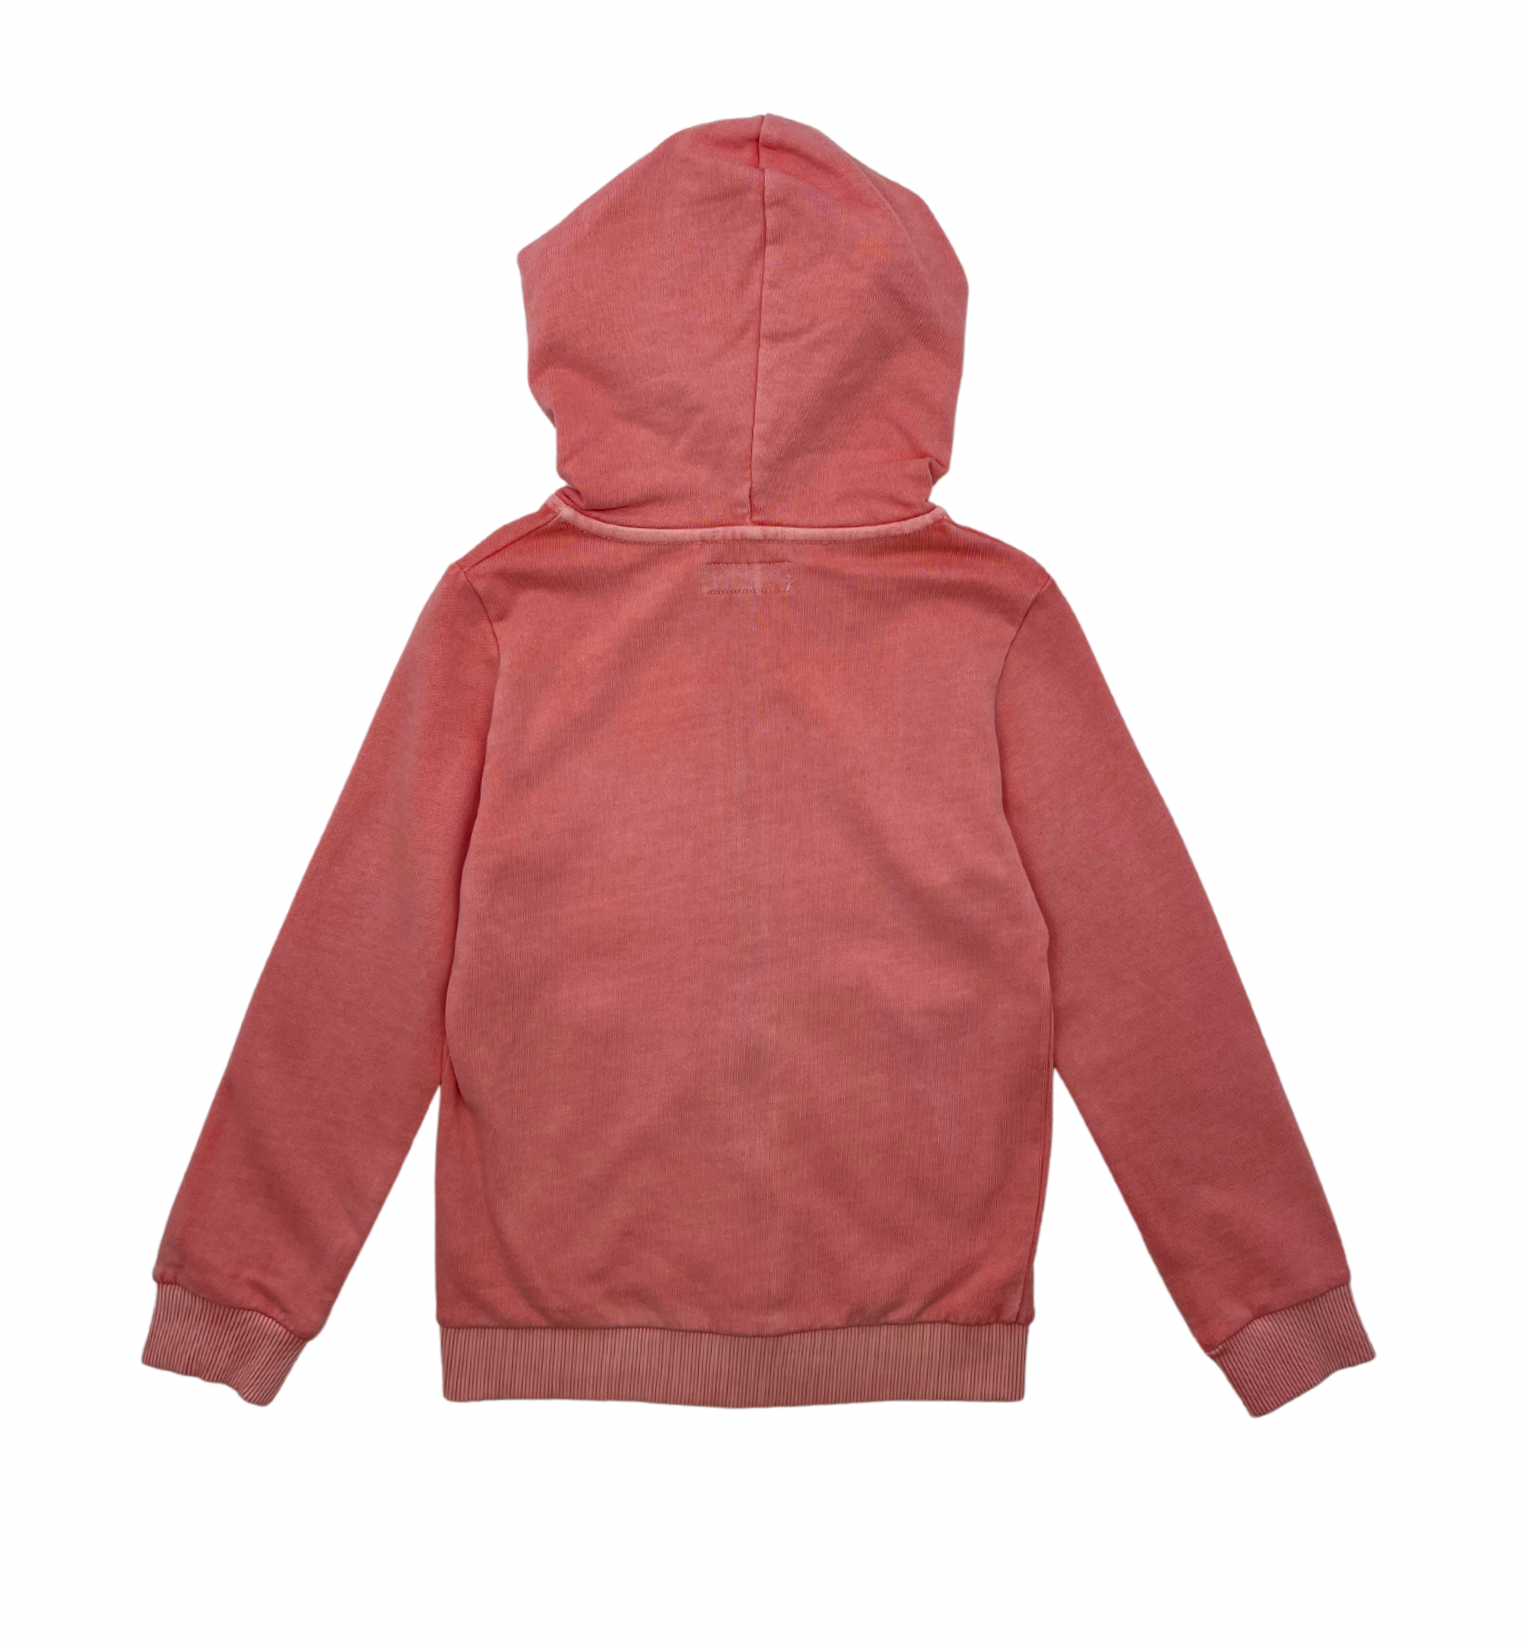 WOOLRICH - Salmon pink sweatshirt - 8 years old